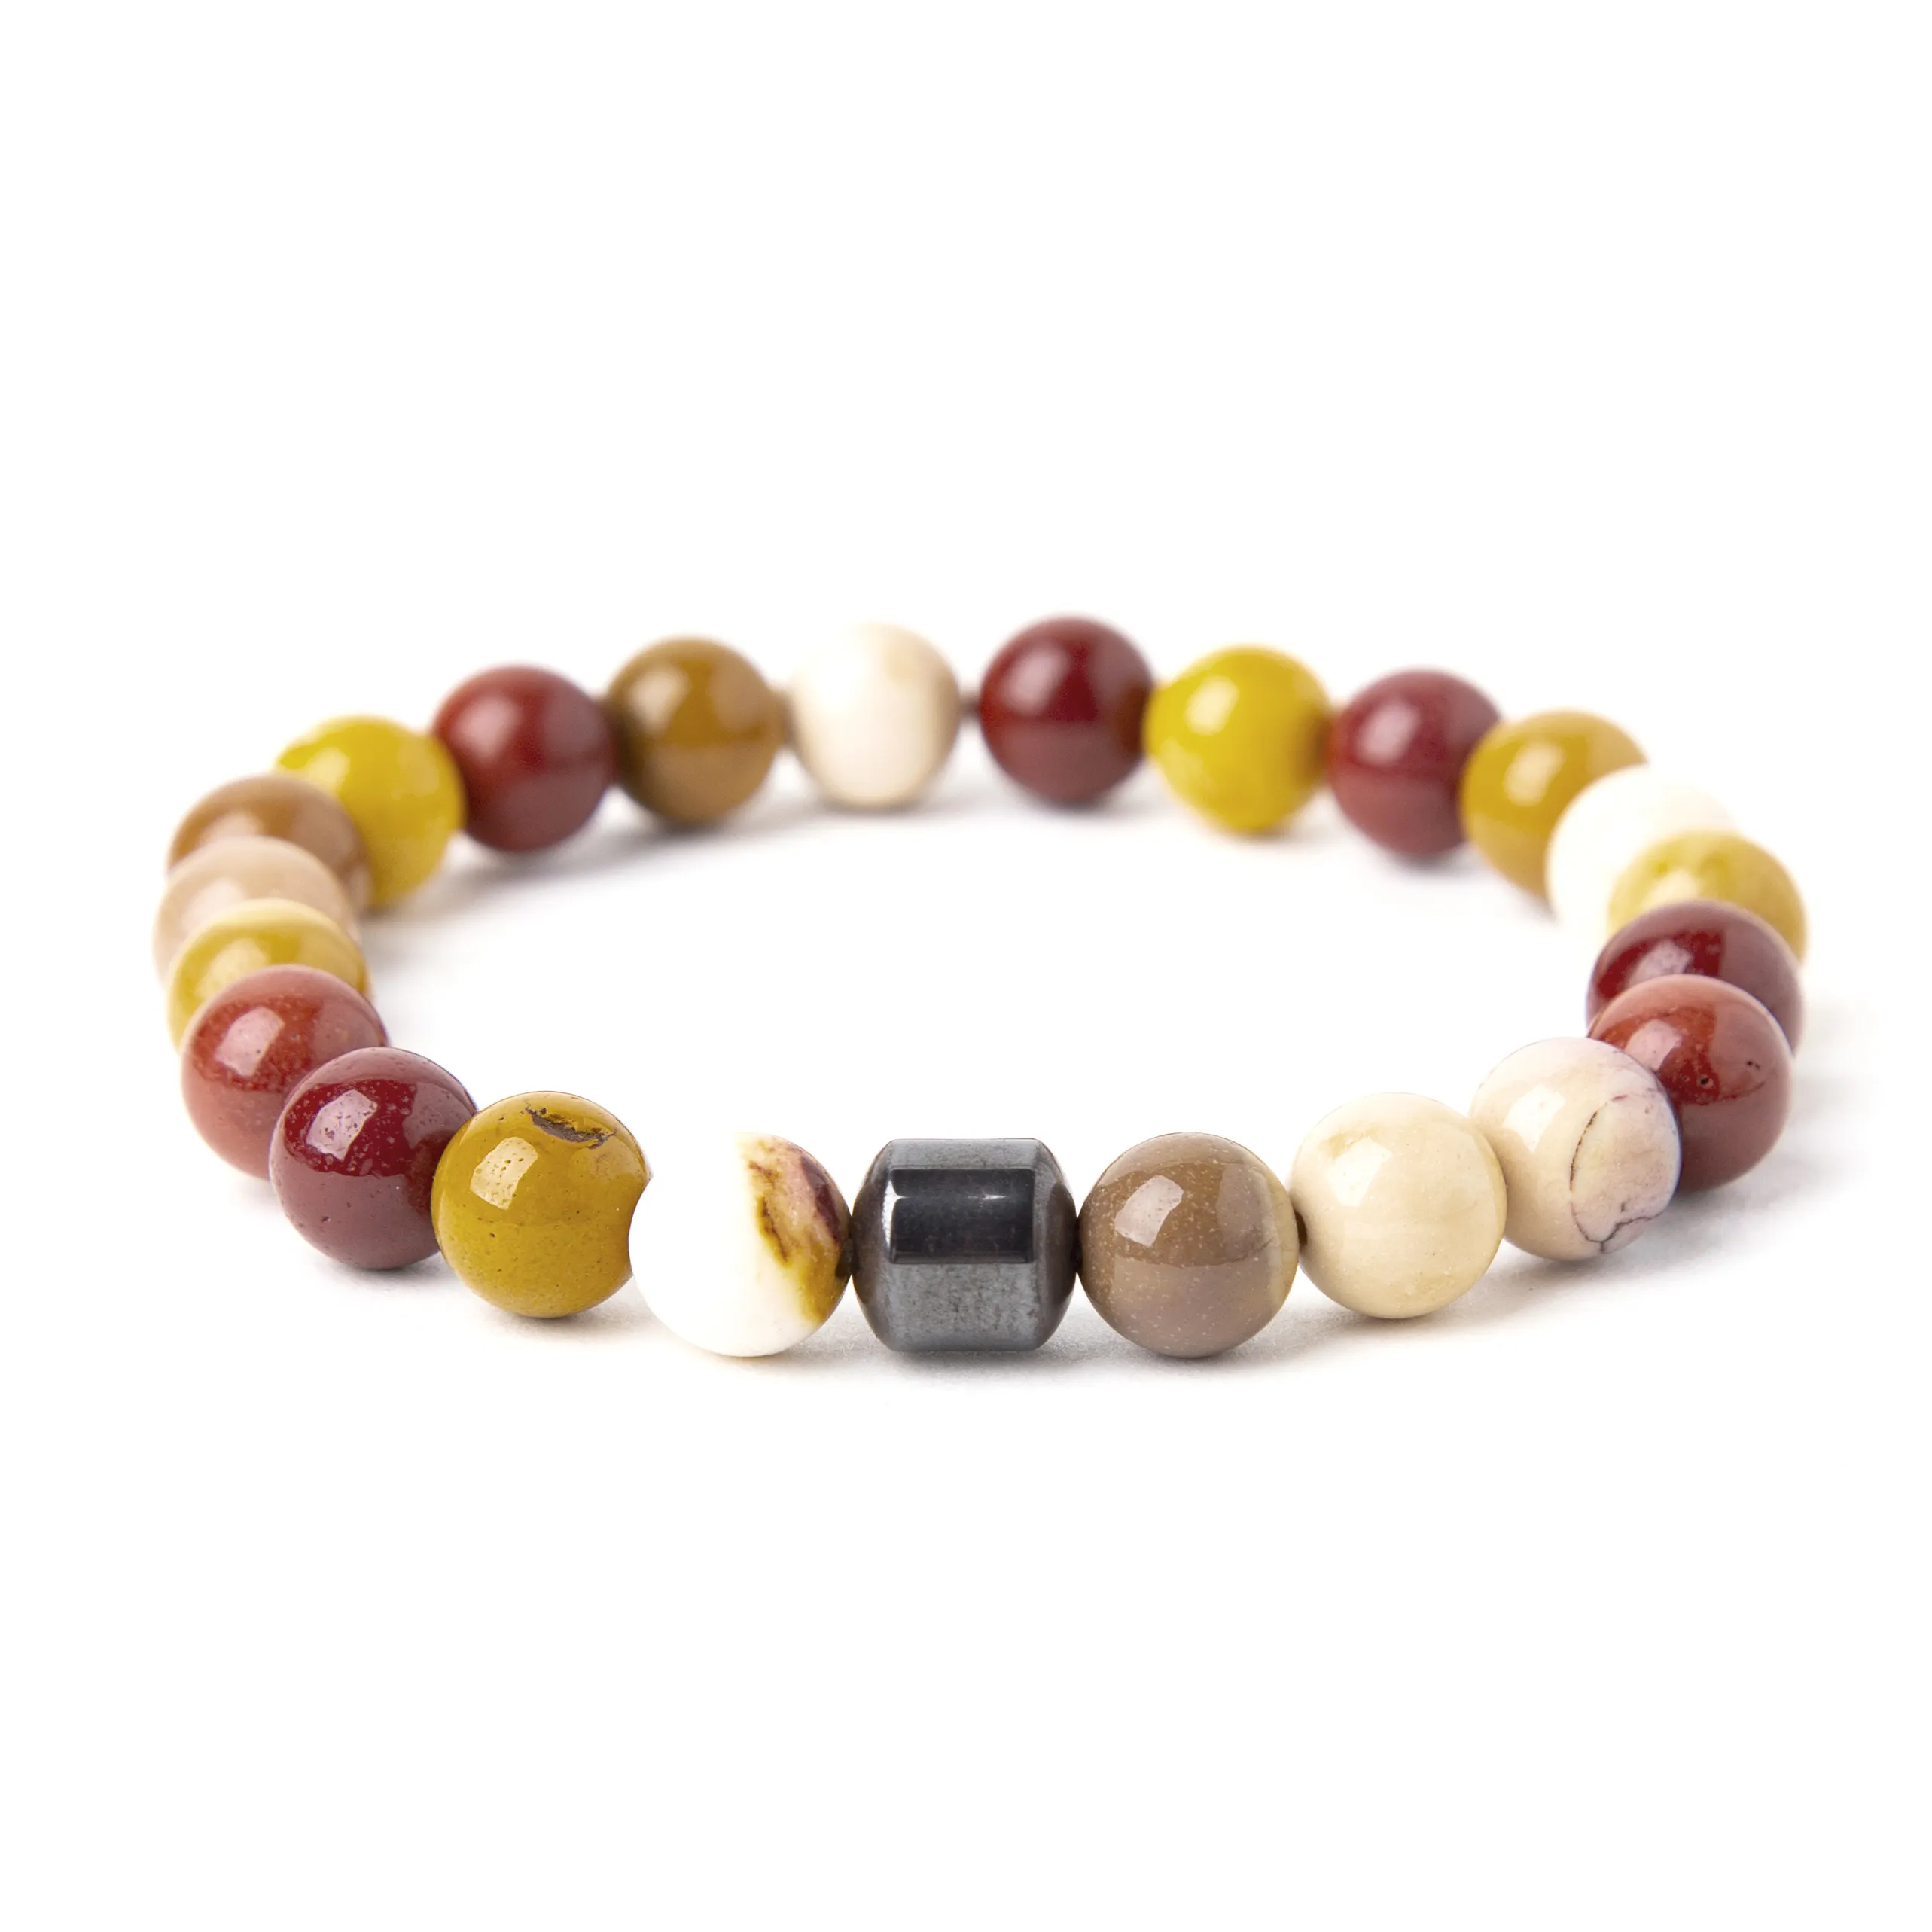 Wholesale Healing Stone Beads Bracelet Natural Gemstone Picasso Jasper and Magnetic Hematite Jade Bracelet